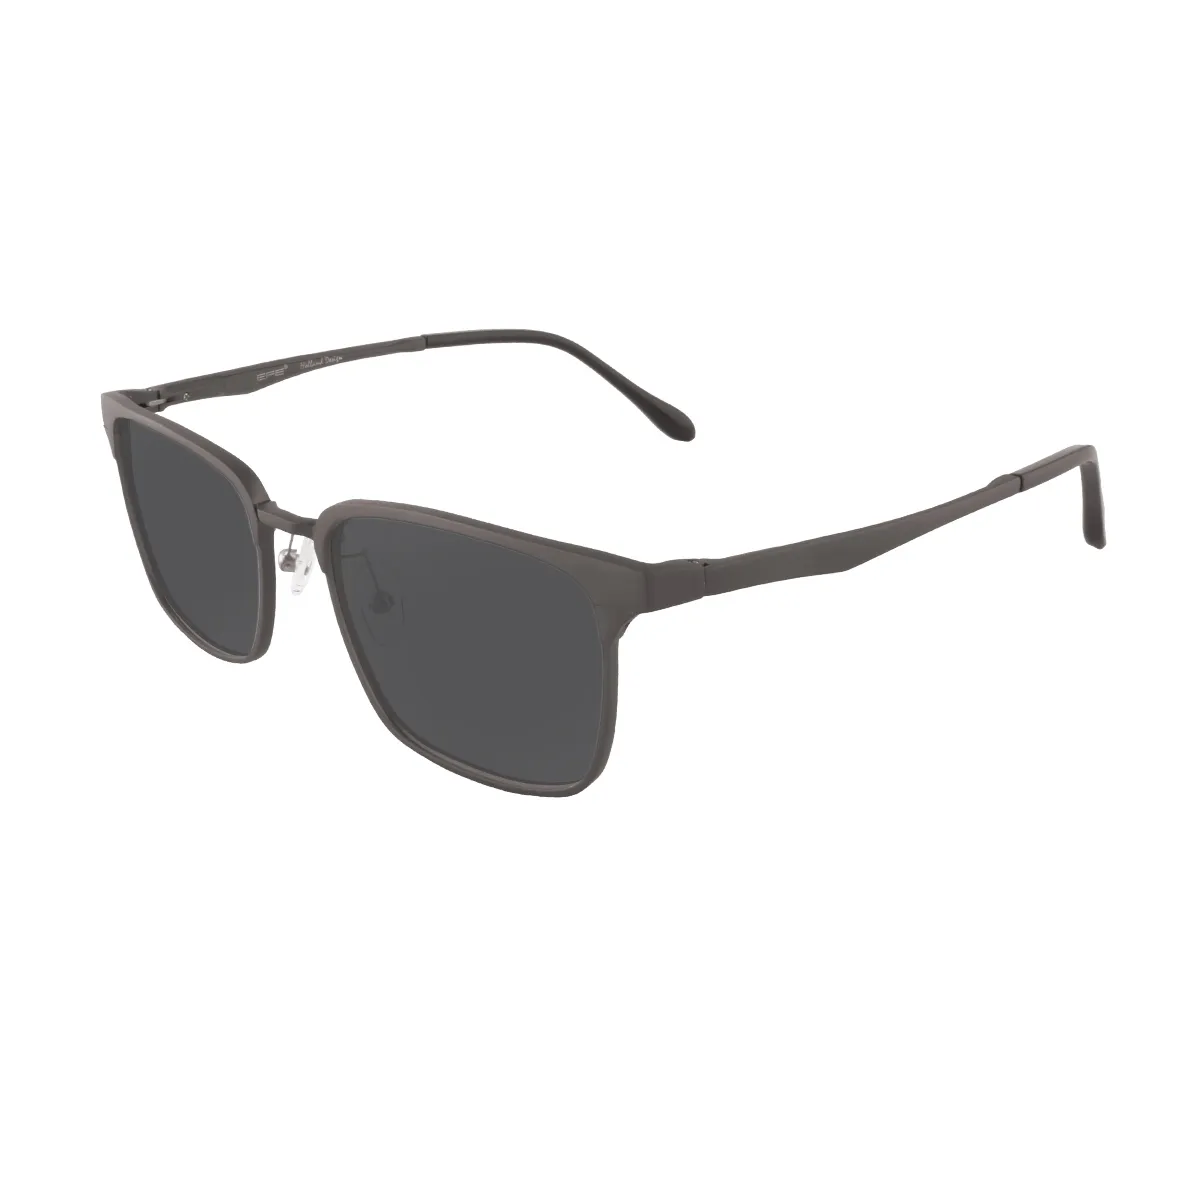 Hilton - Browline Black Sunglasses for Men